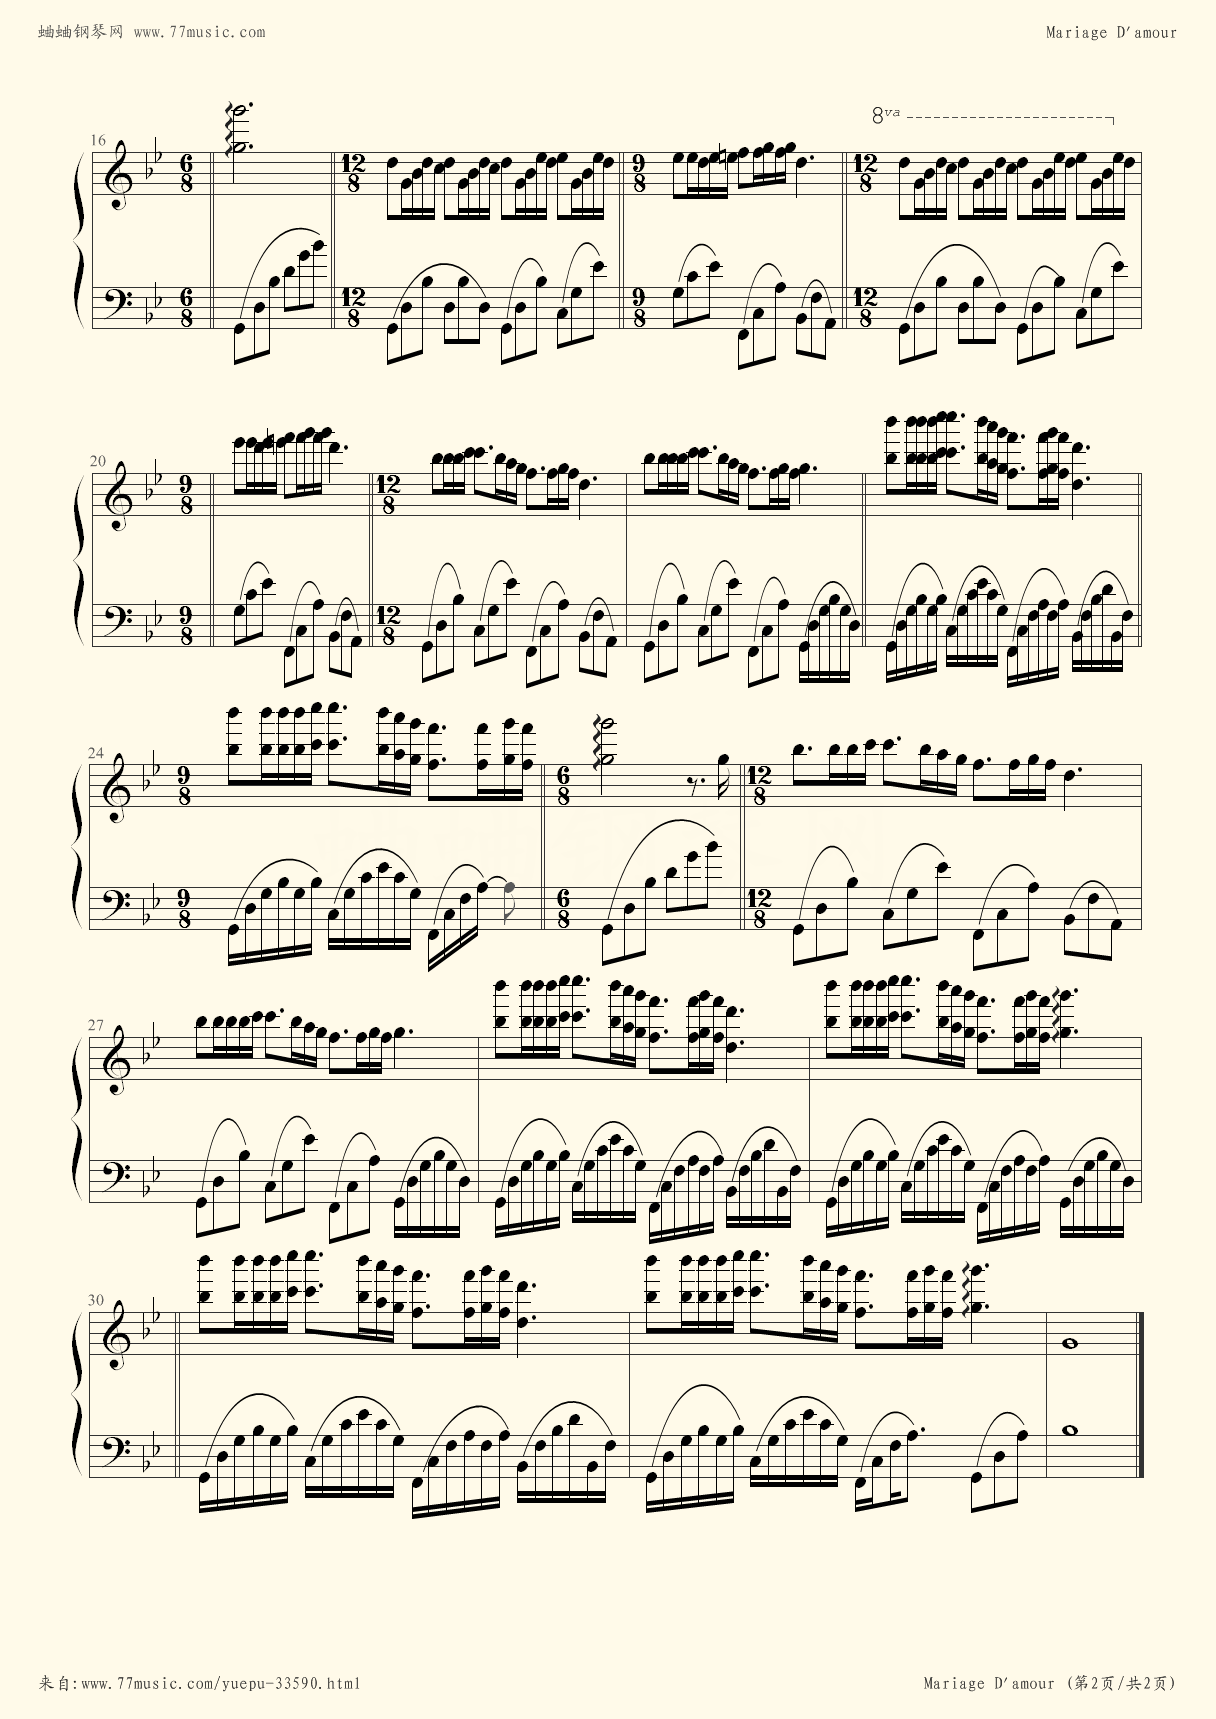 Green Sleeves - Richard Clayderman - Flash Version2 Piano Sheet Music Free